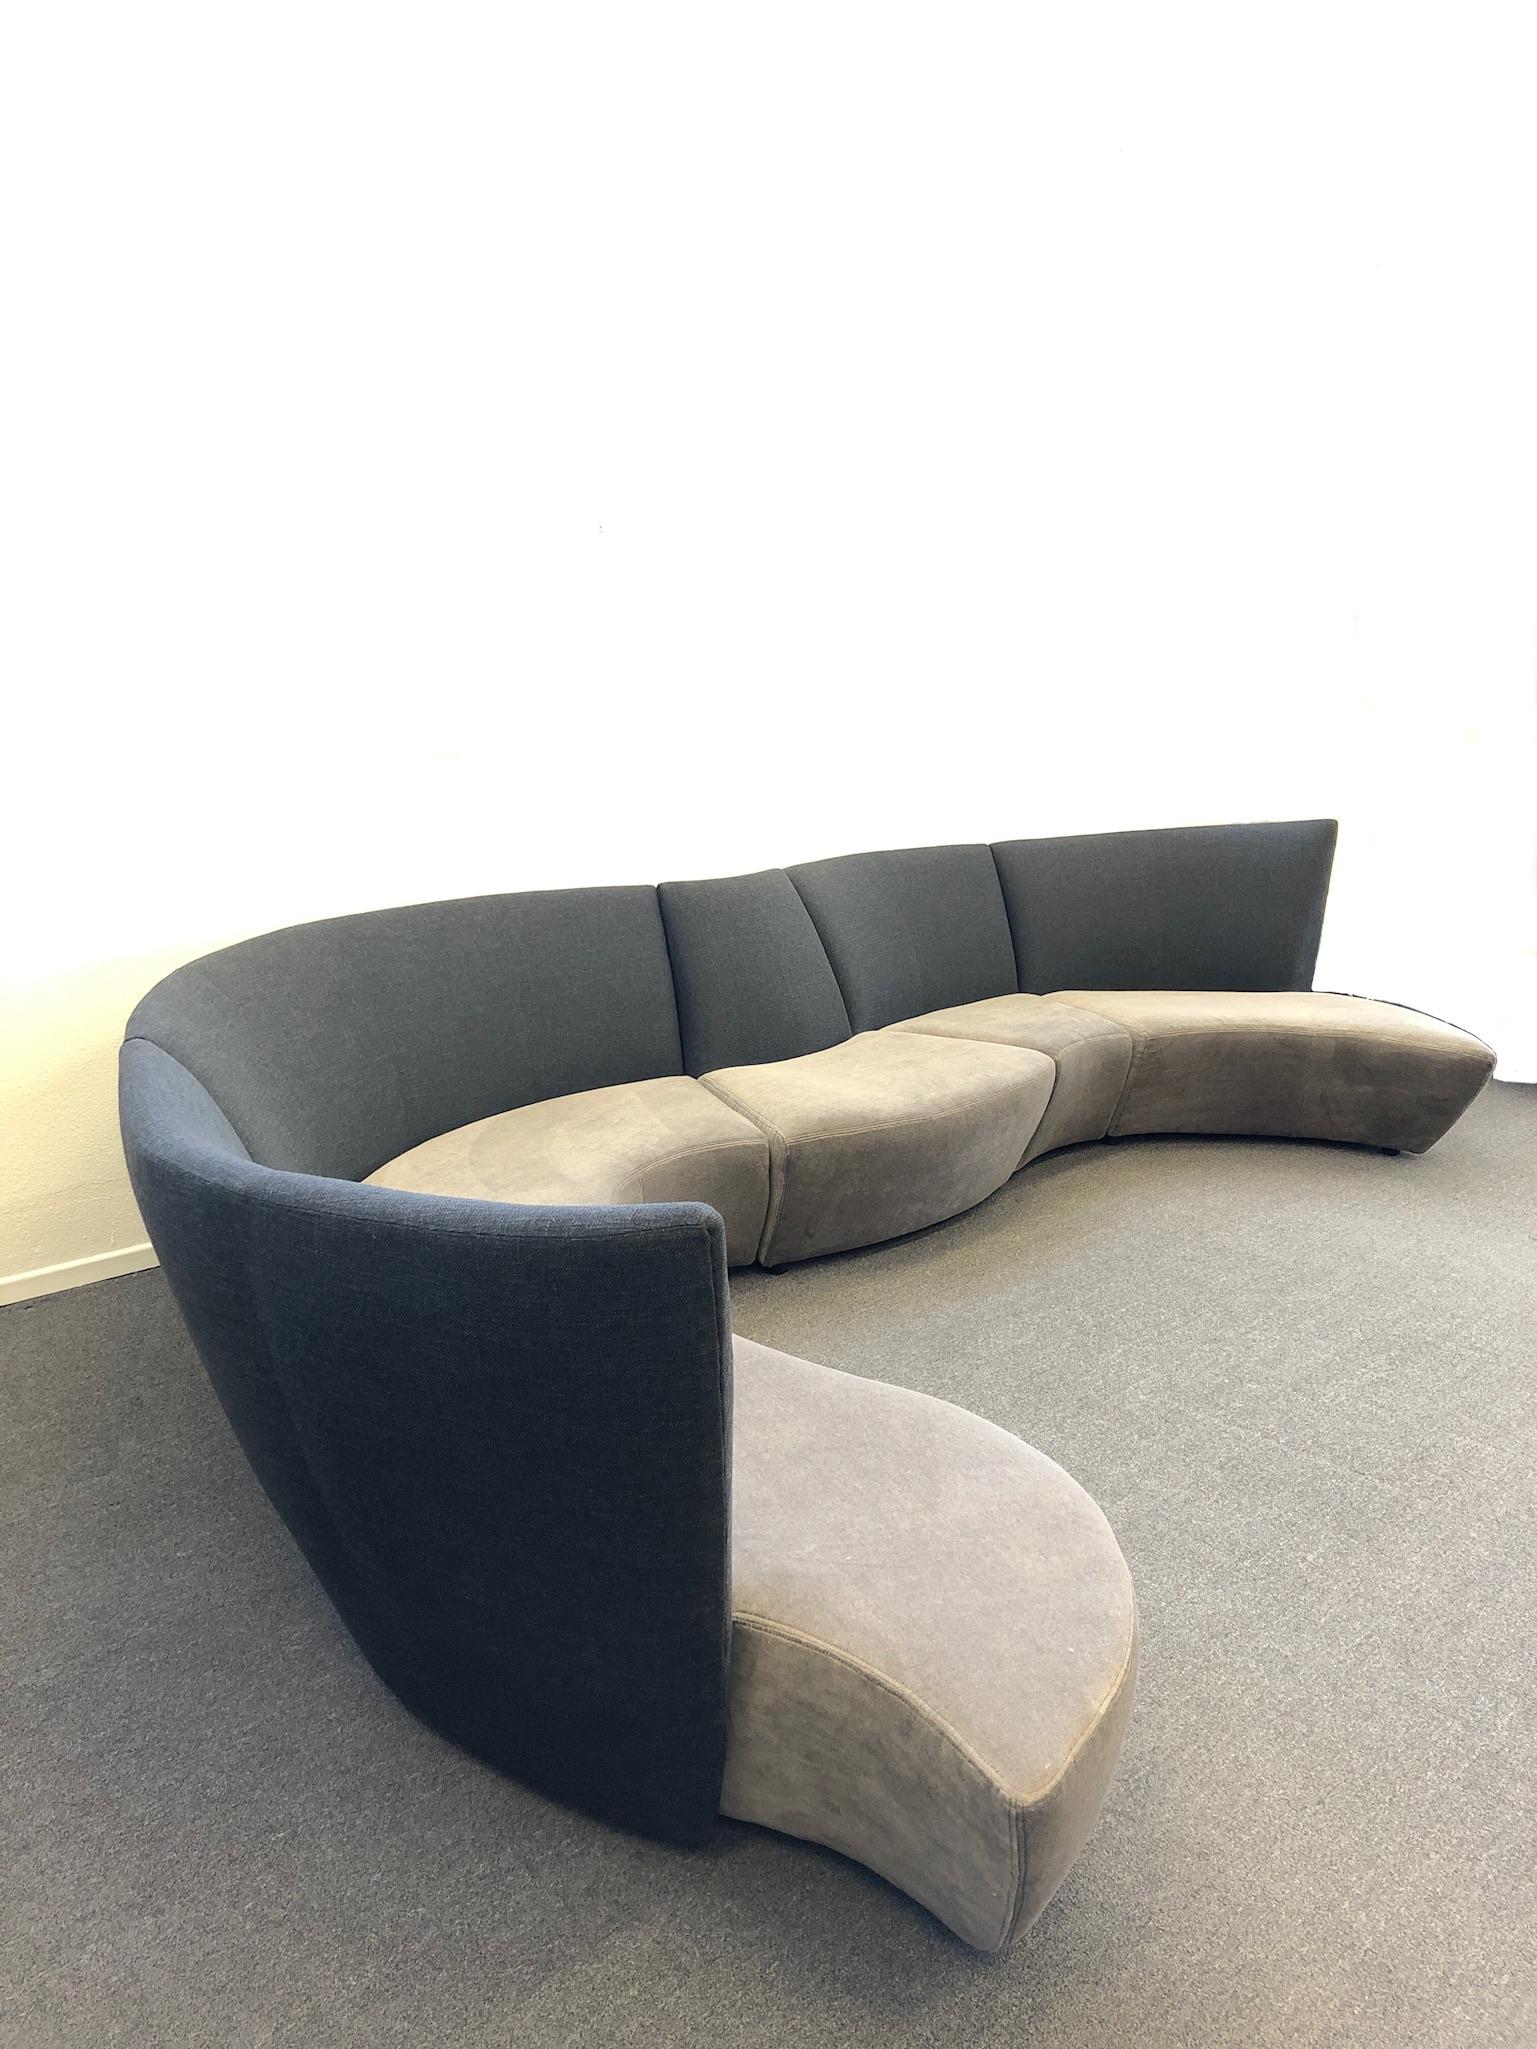 five piece sectional sofa